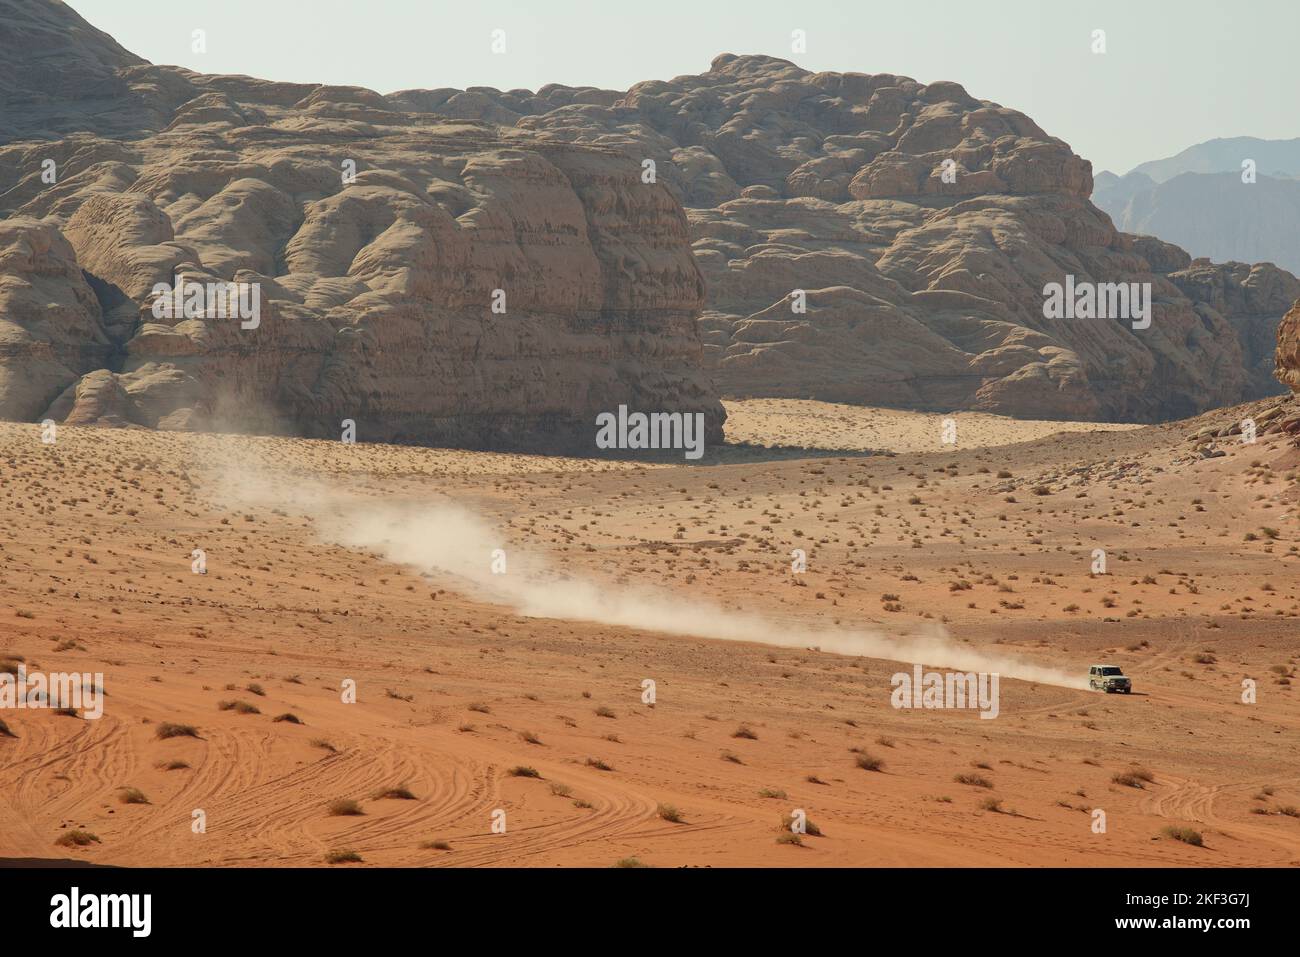 Desierto de Wadi Rum UNESCO Patrimonio Mundial Área protegida. Poblado por familias beduinas Foto de stock